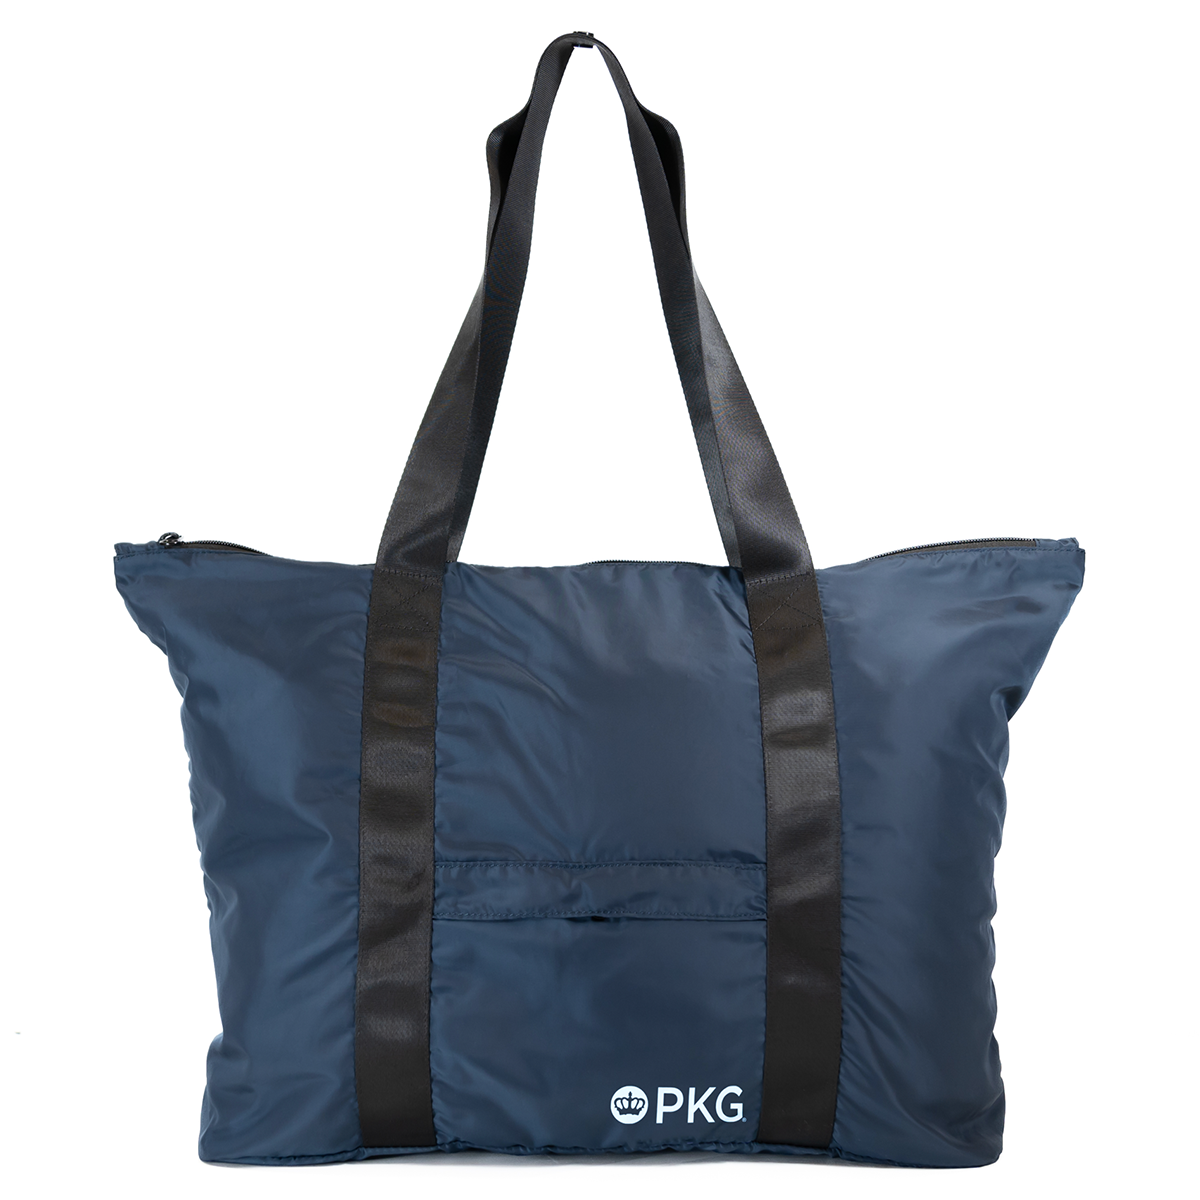 PKG Umiak Recycled Packable Tote Bag